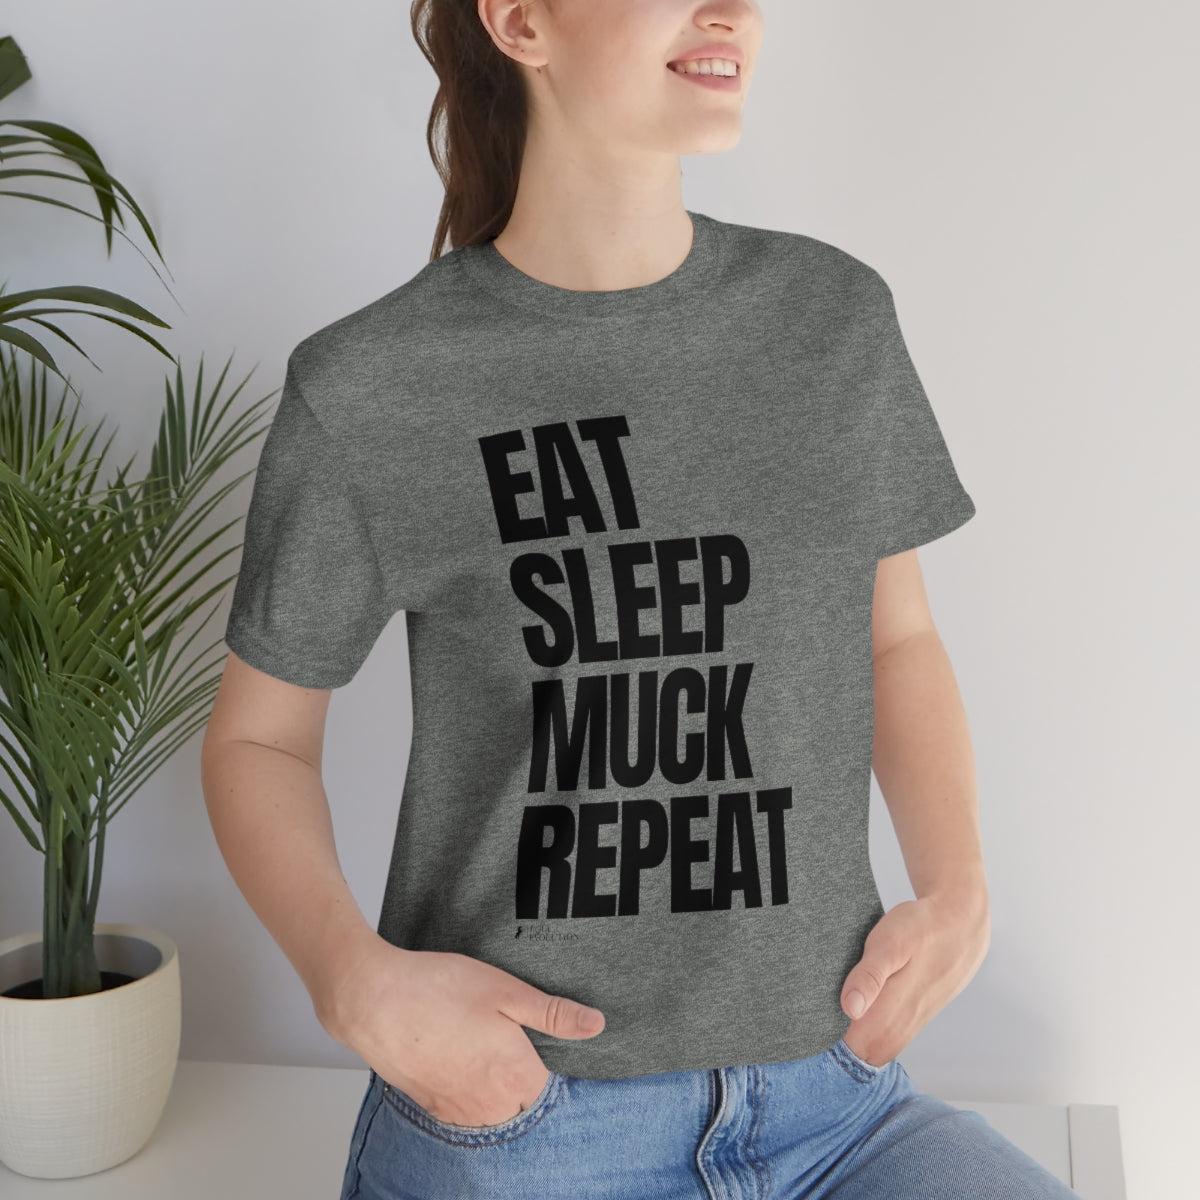 Eat Sleep Muck Repeat